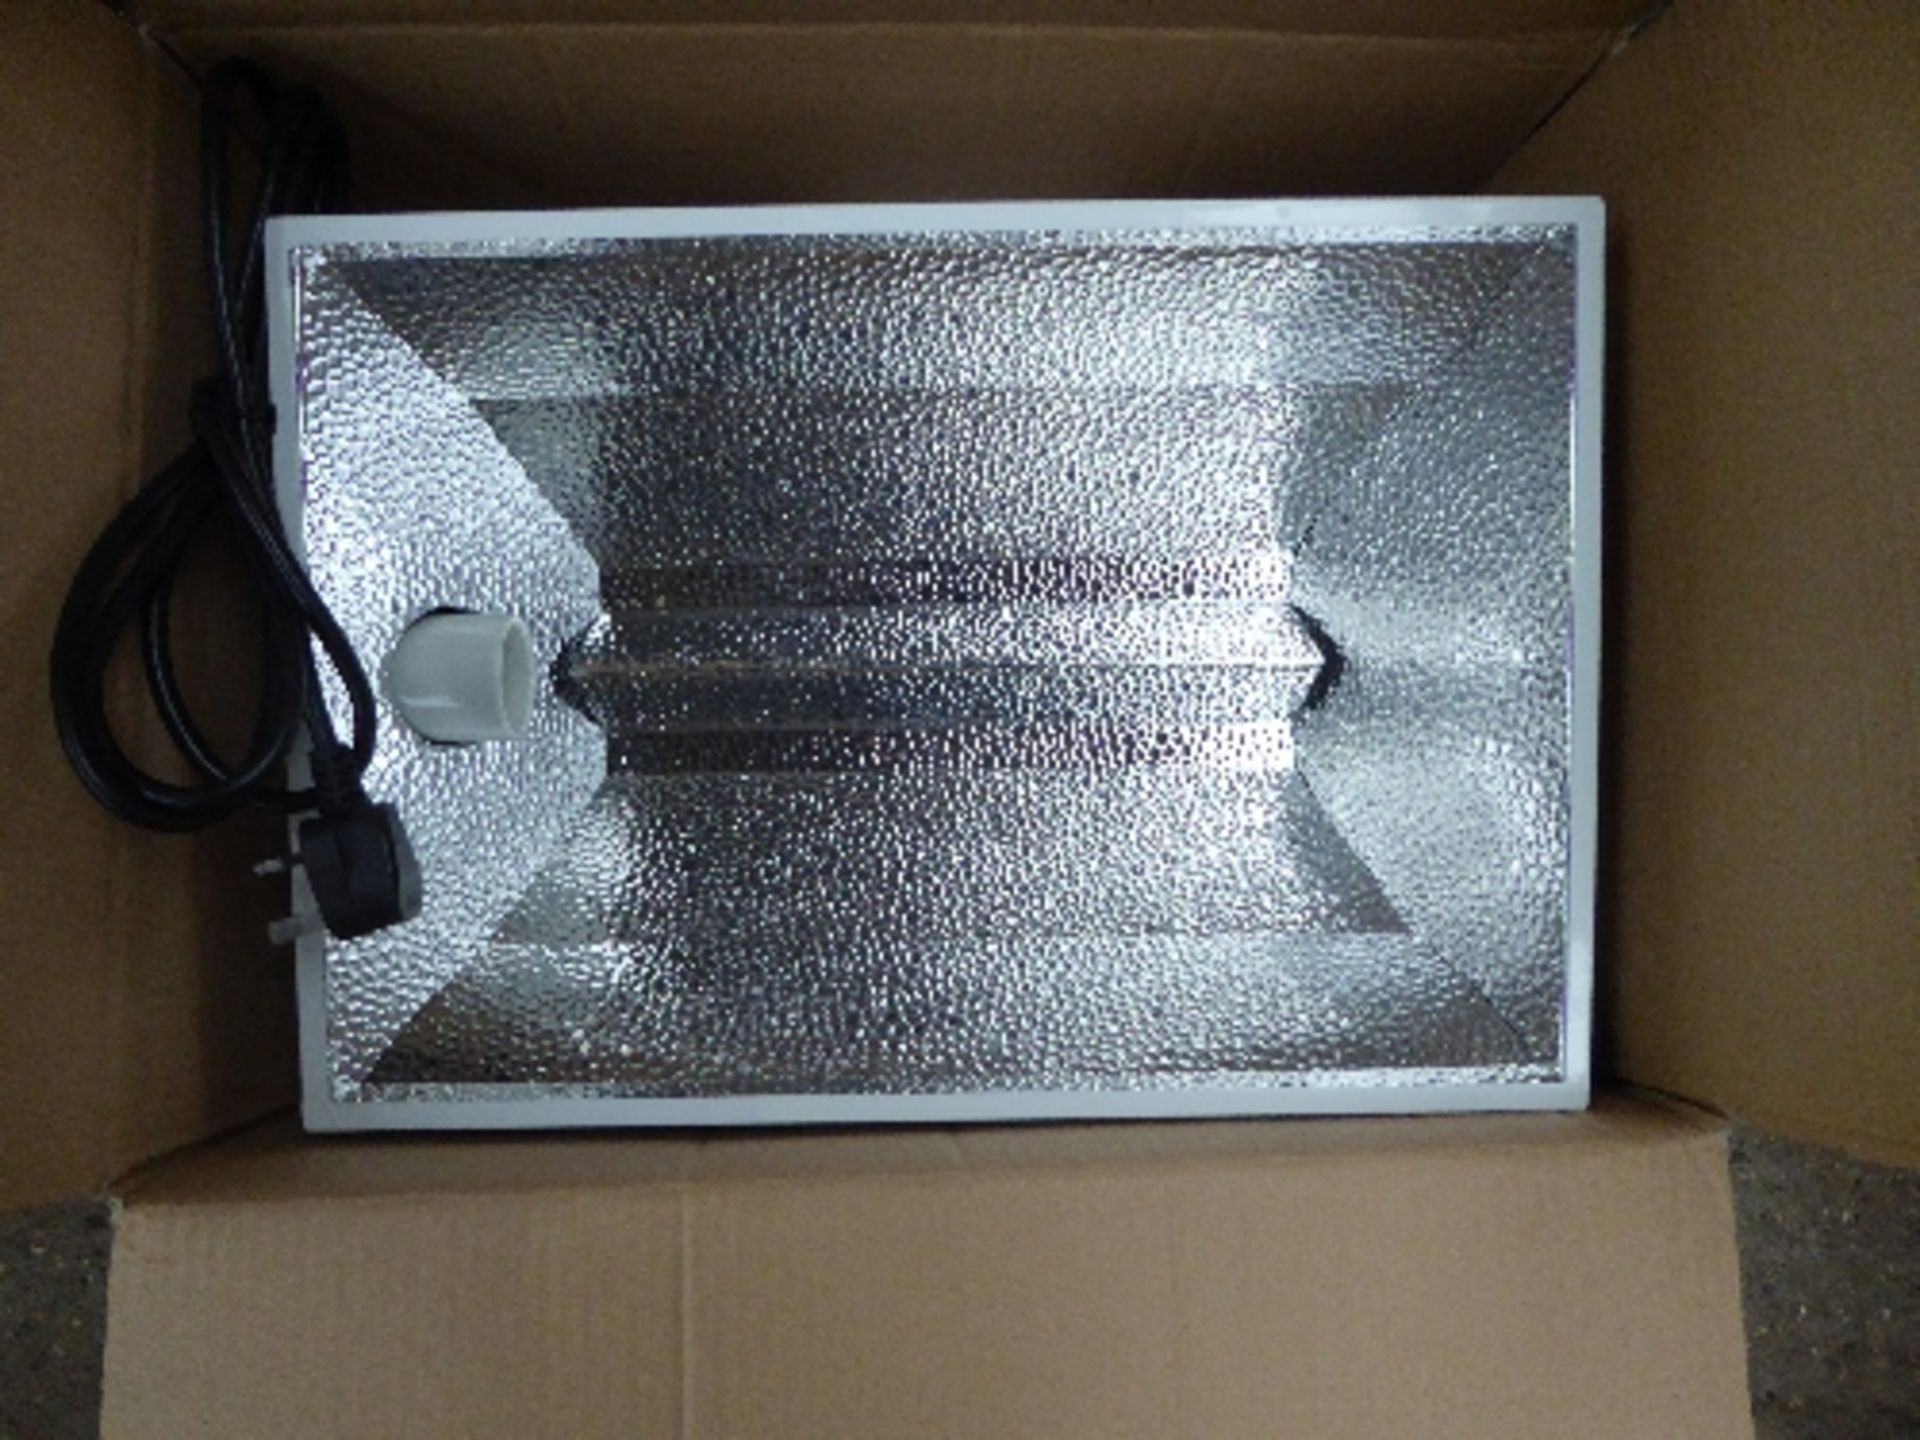 2x 240v grow light reflectors, 50cm x 35cm